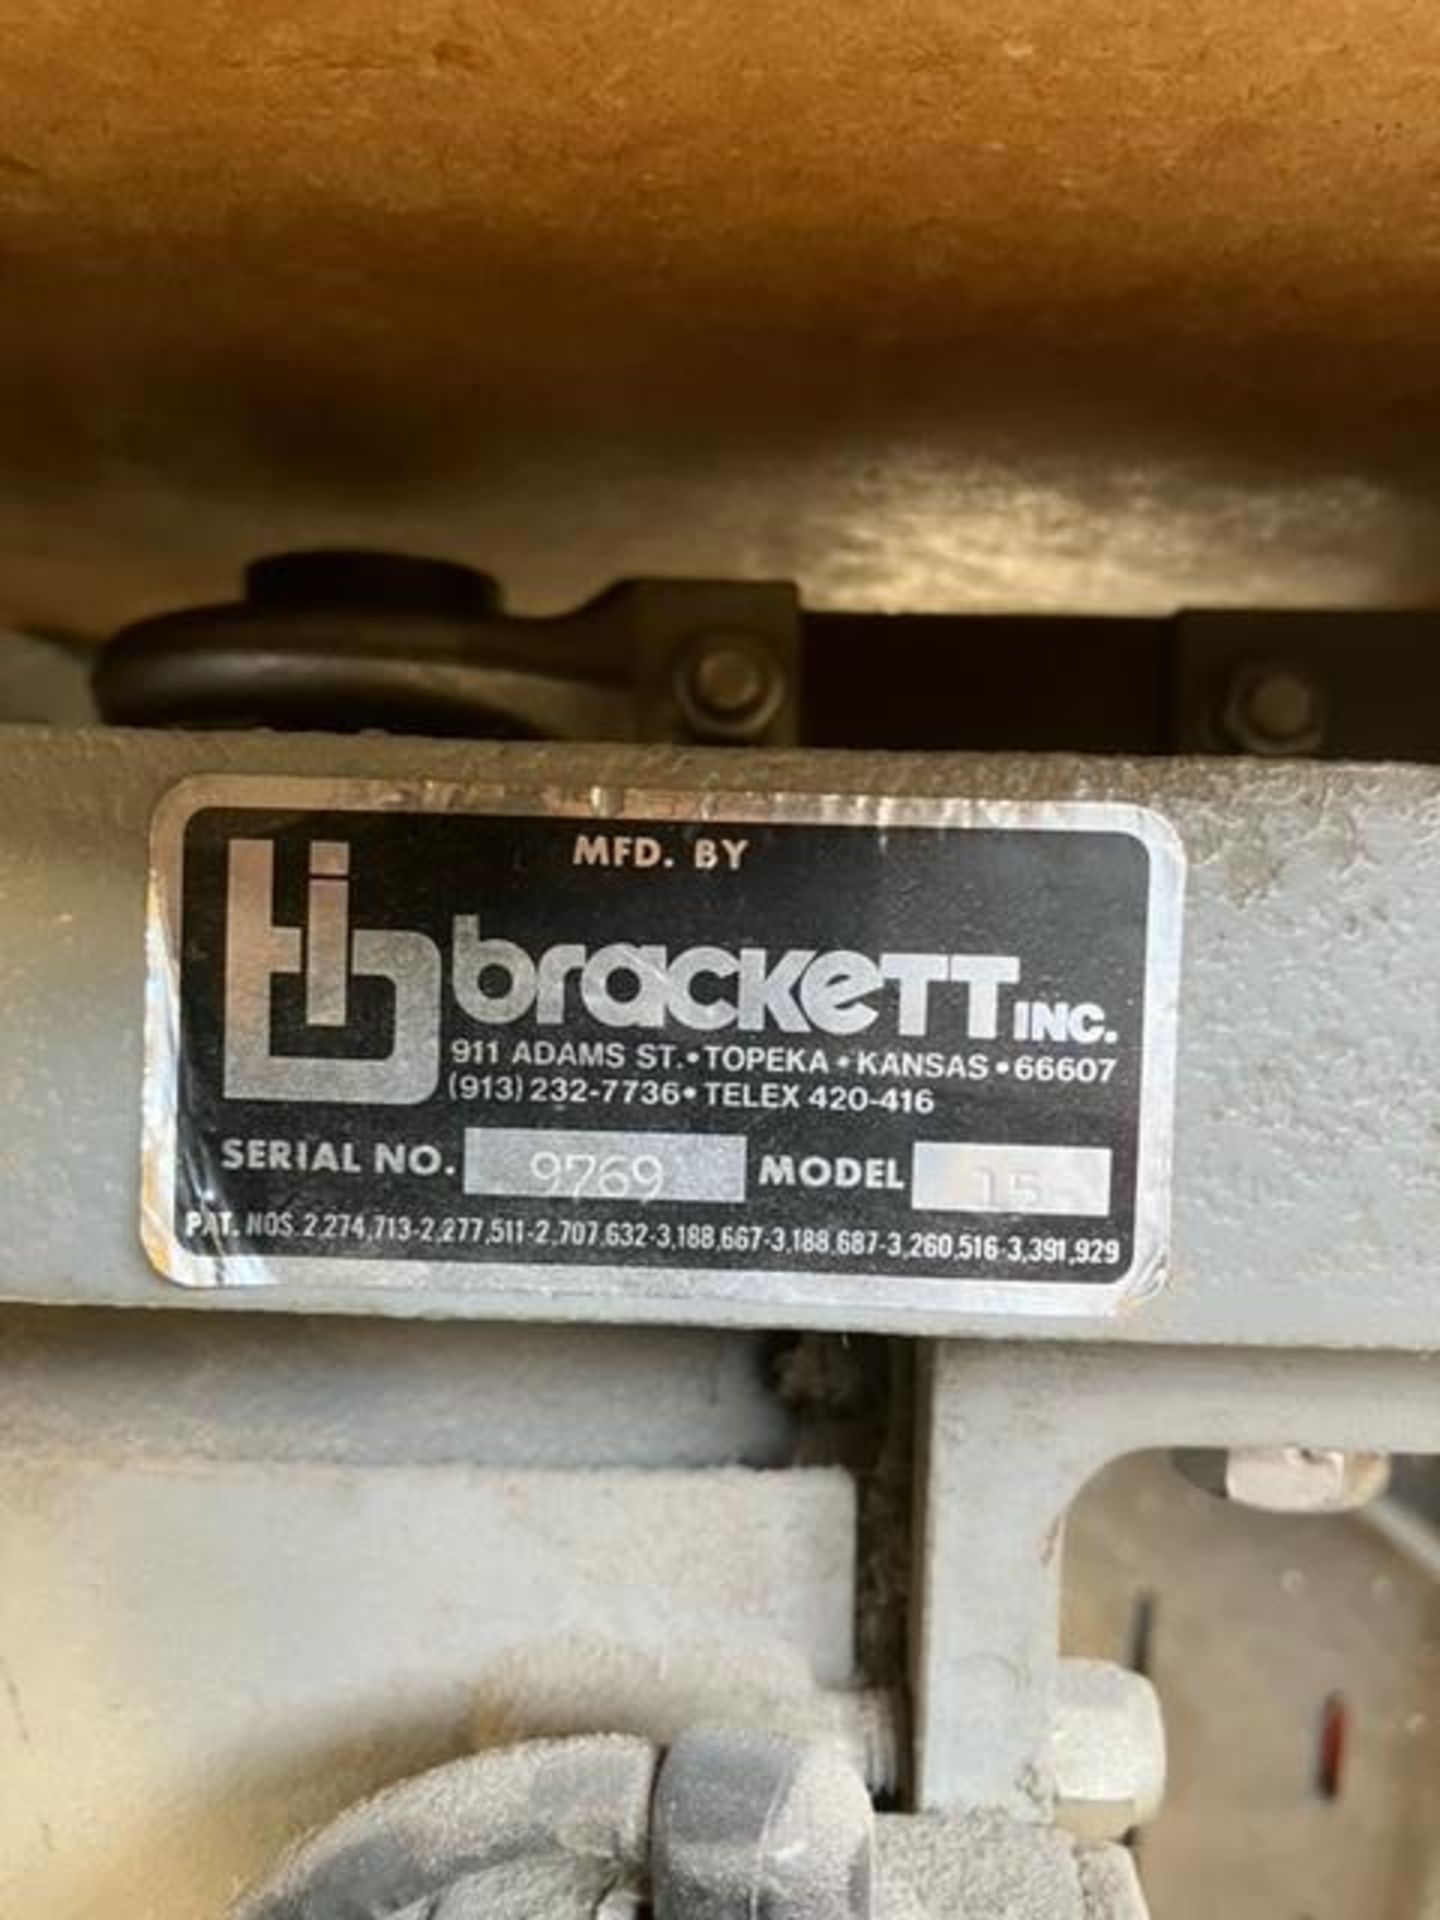 Brackett Incorporated Jogger - Image 3 of 3